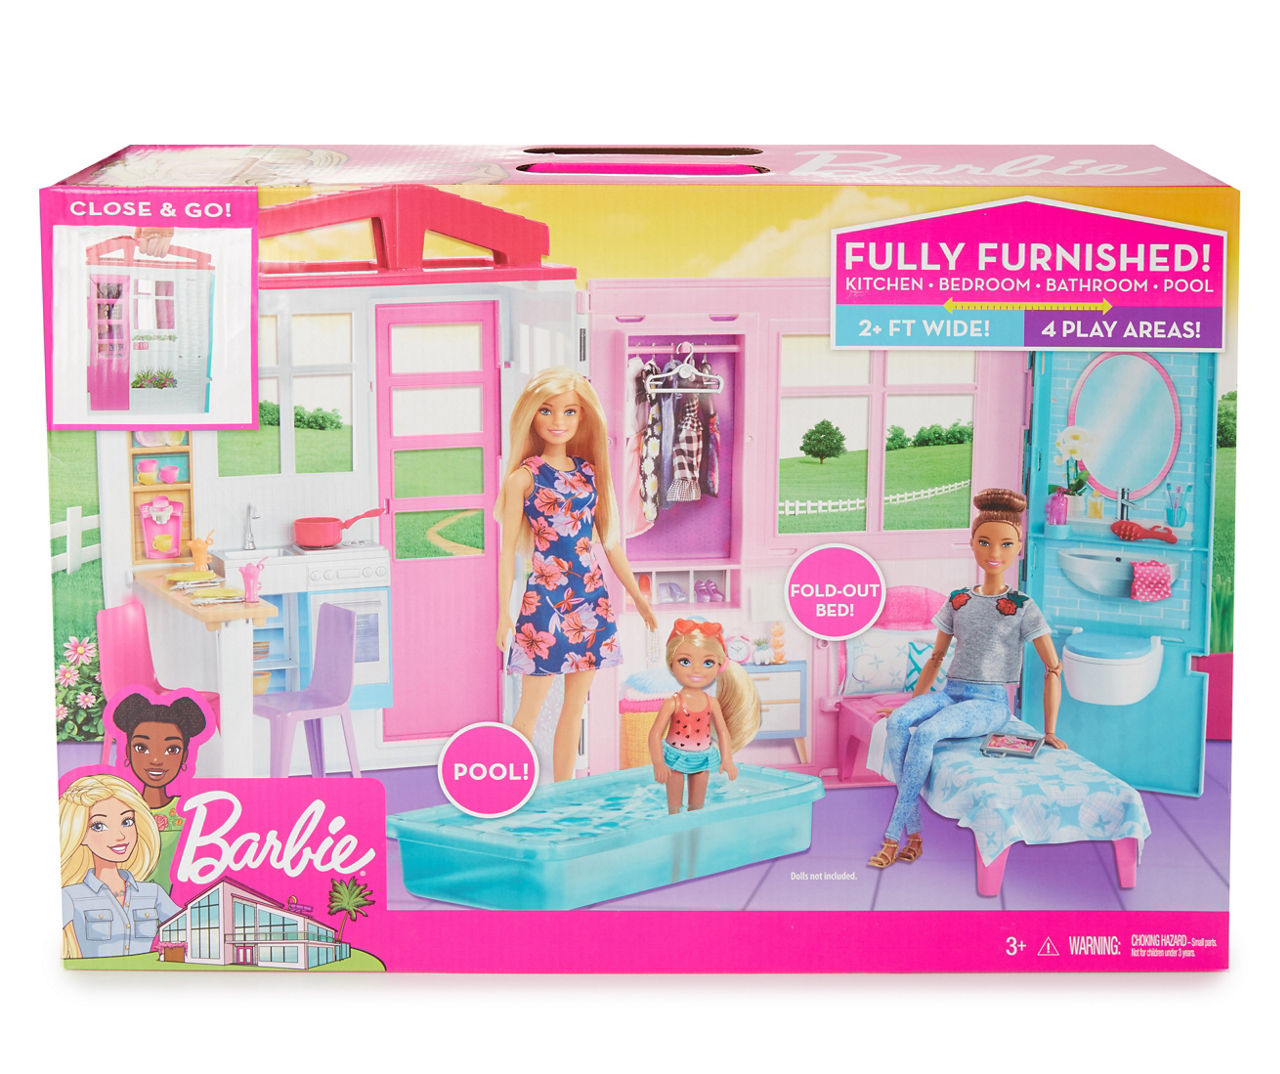 House Barbie Dolls Large, Barbie House Furniture